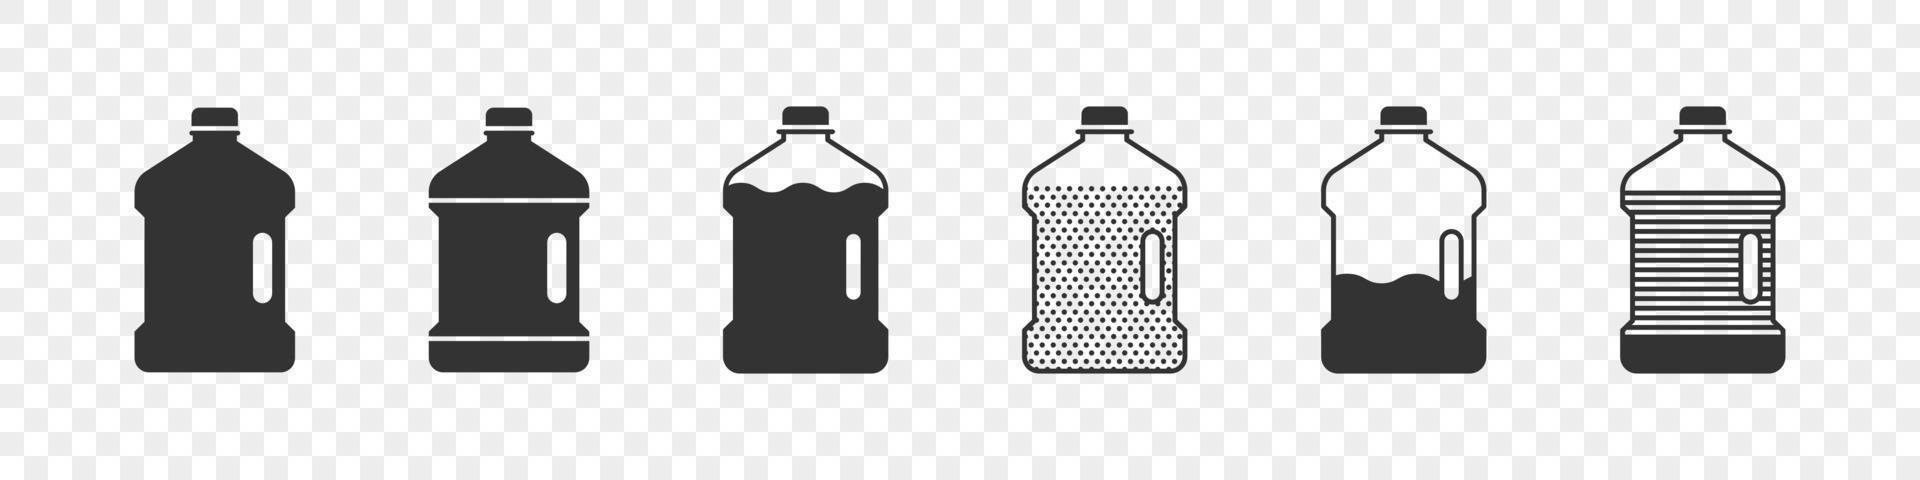 Plastic bottles. Silhouettes of bottles. Concept flat bottles icons. Vector illustration